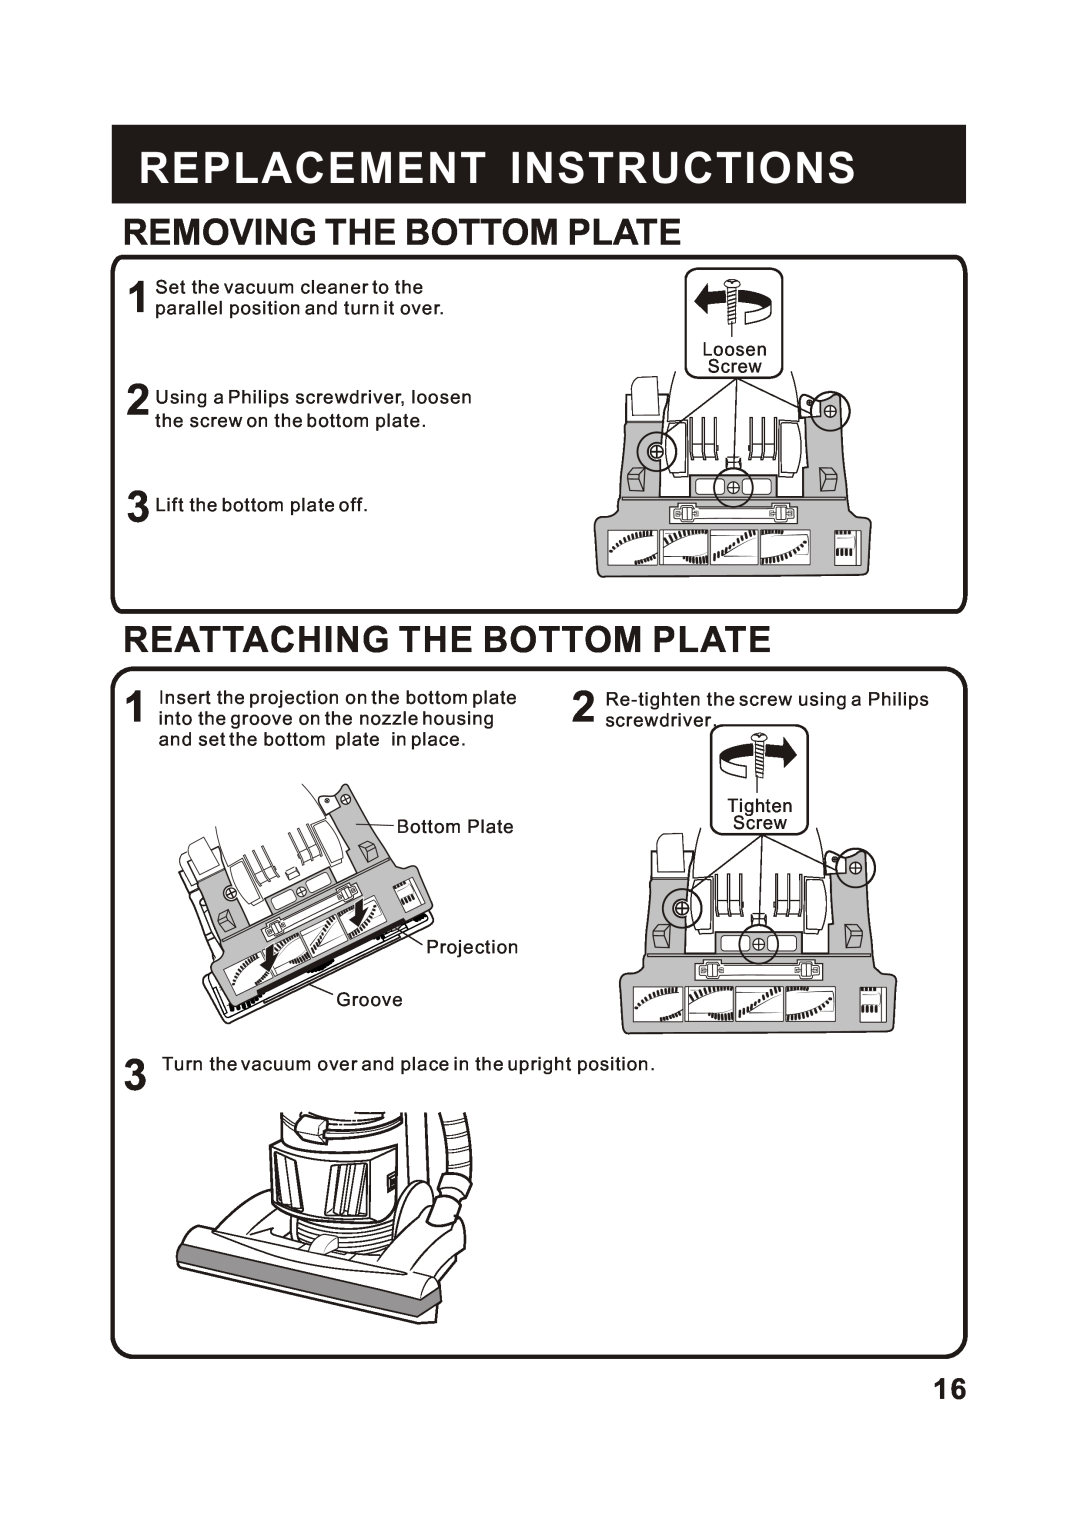 Fantom Vacuum FM744H instruction manual Removing The Bottom Plate, Reattaching The Bottom Plate, Replacement Instructions 